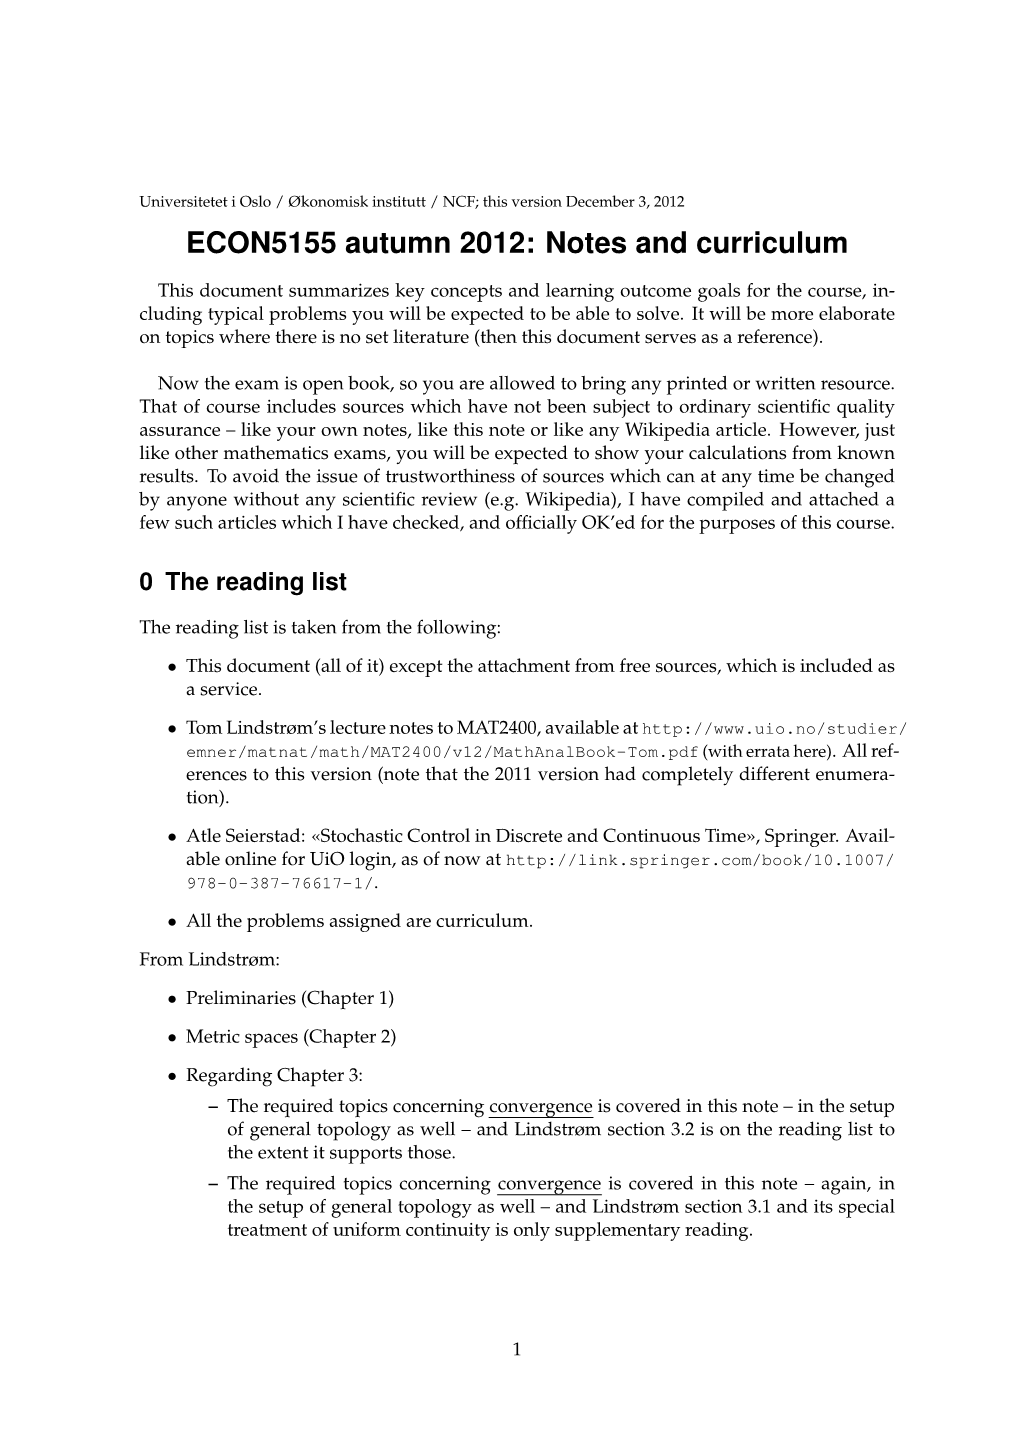 ECON5155 Autumn 2012: Notes and Curriculum